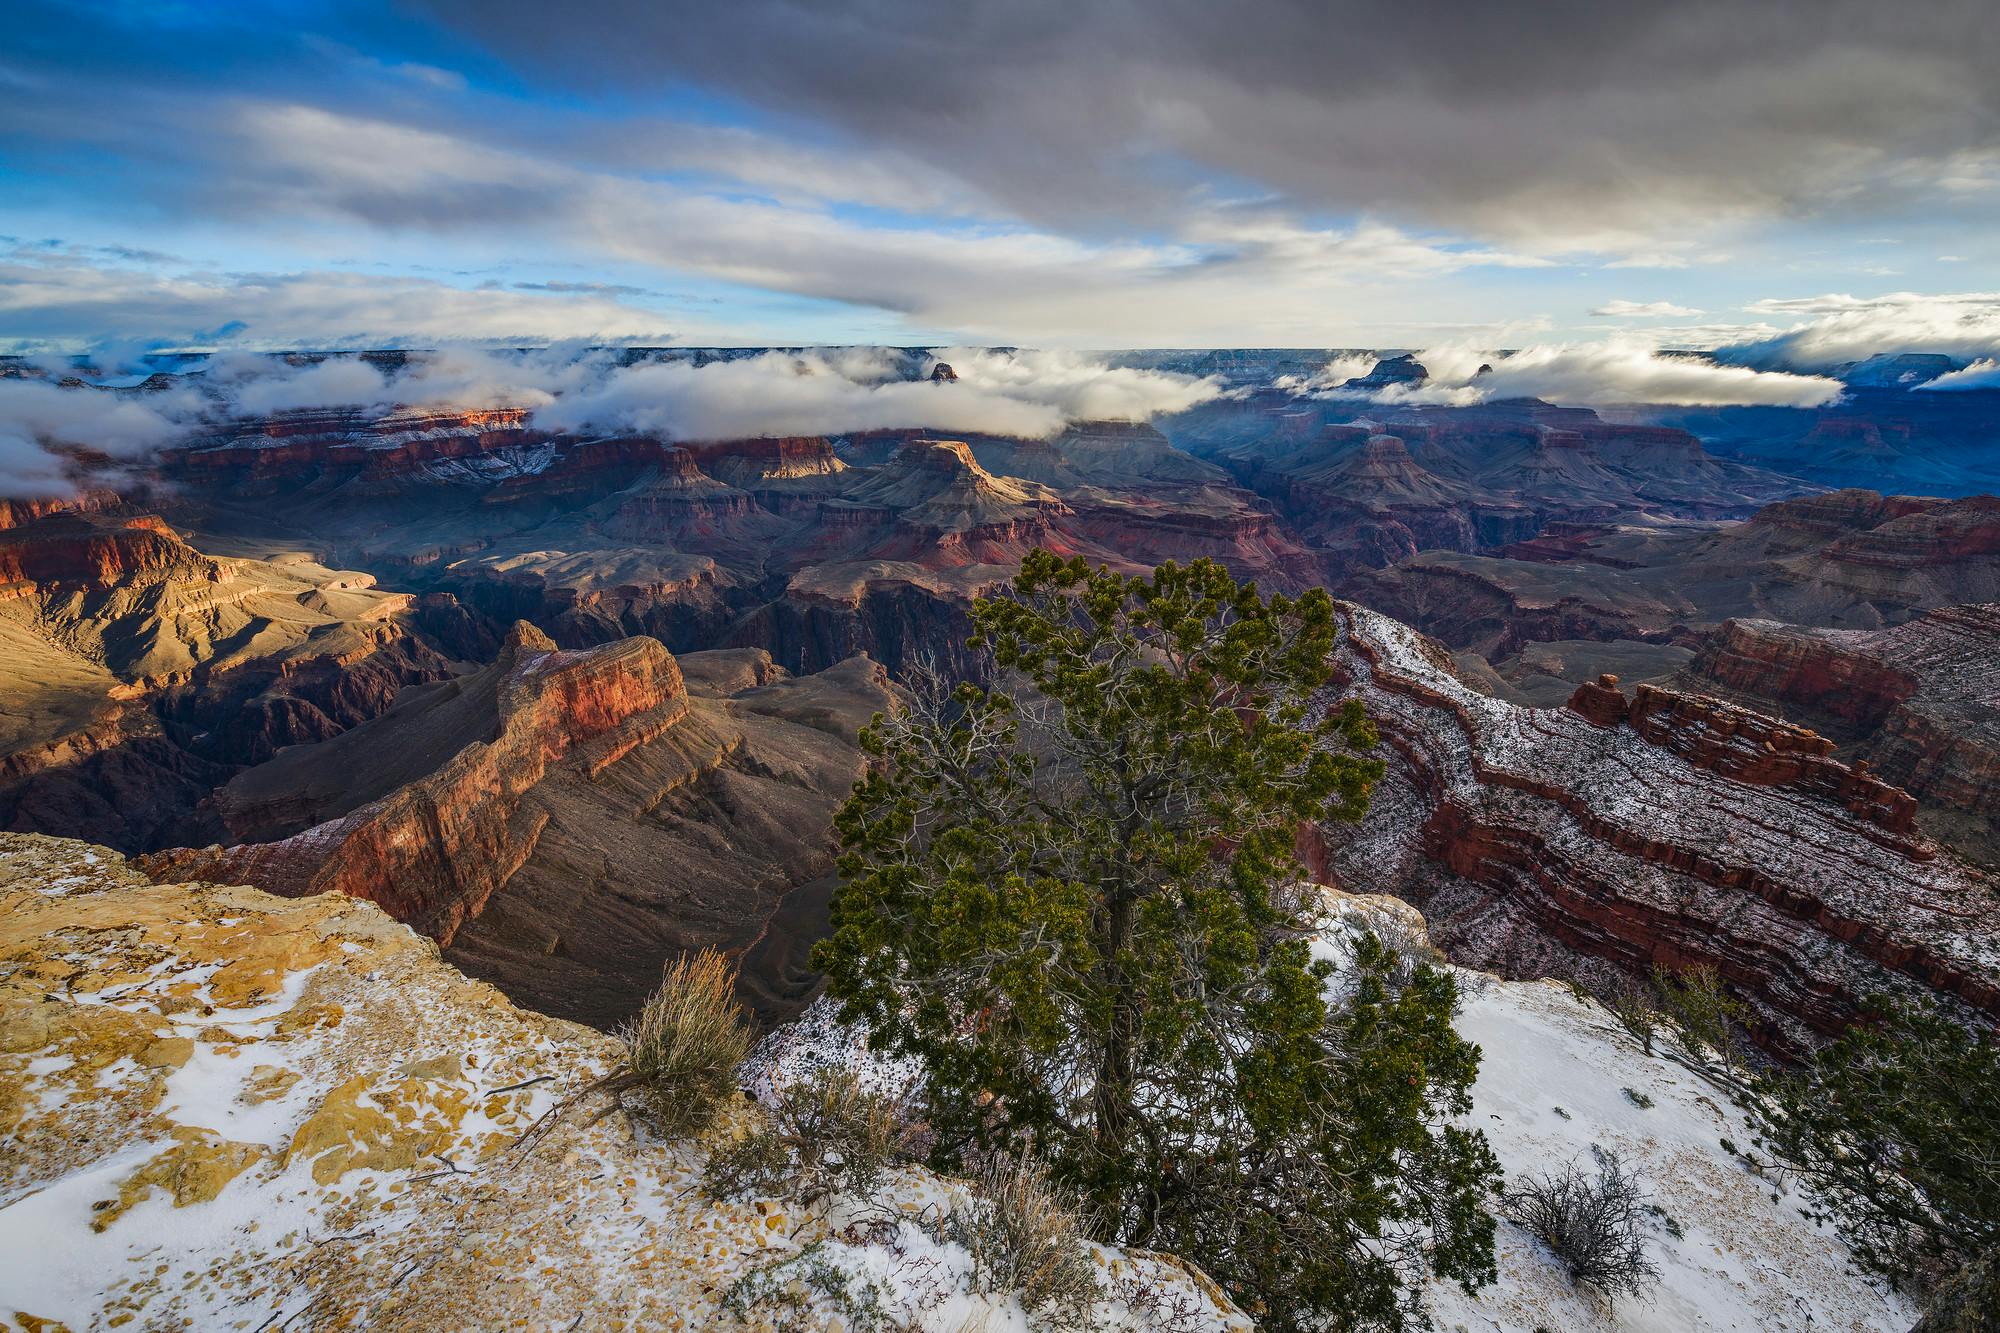 Winter Morning at the Grand Canyon